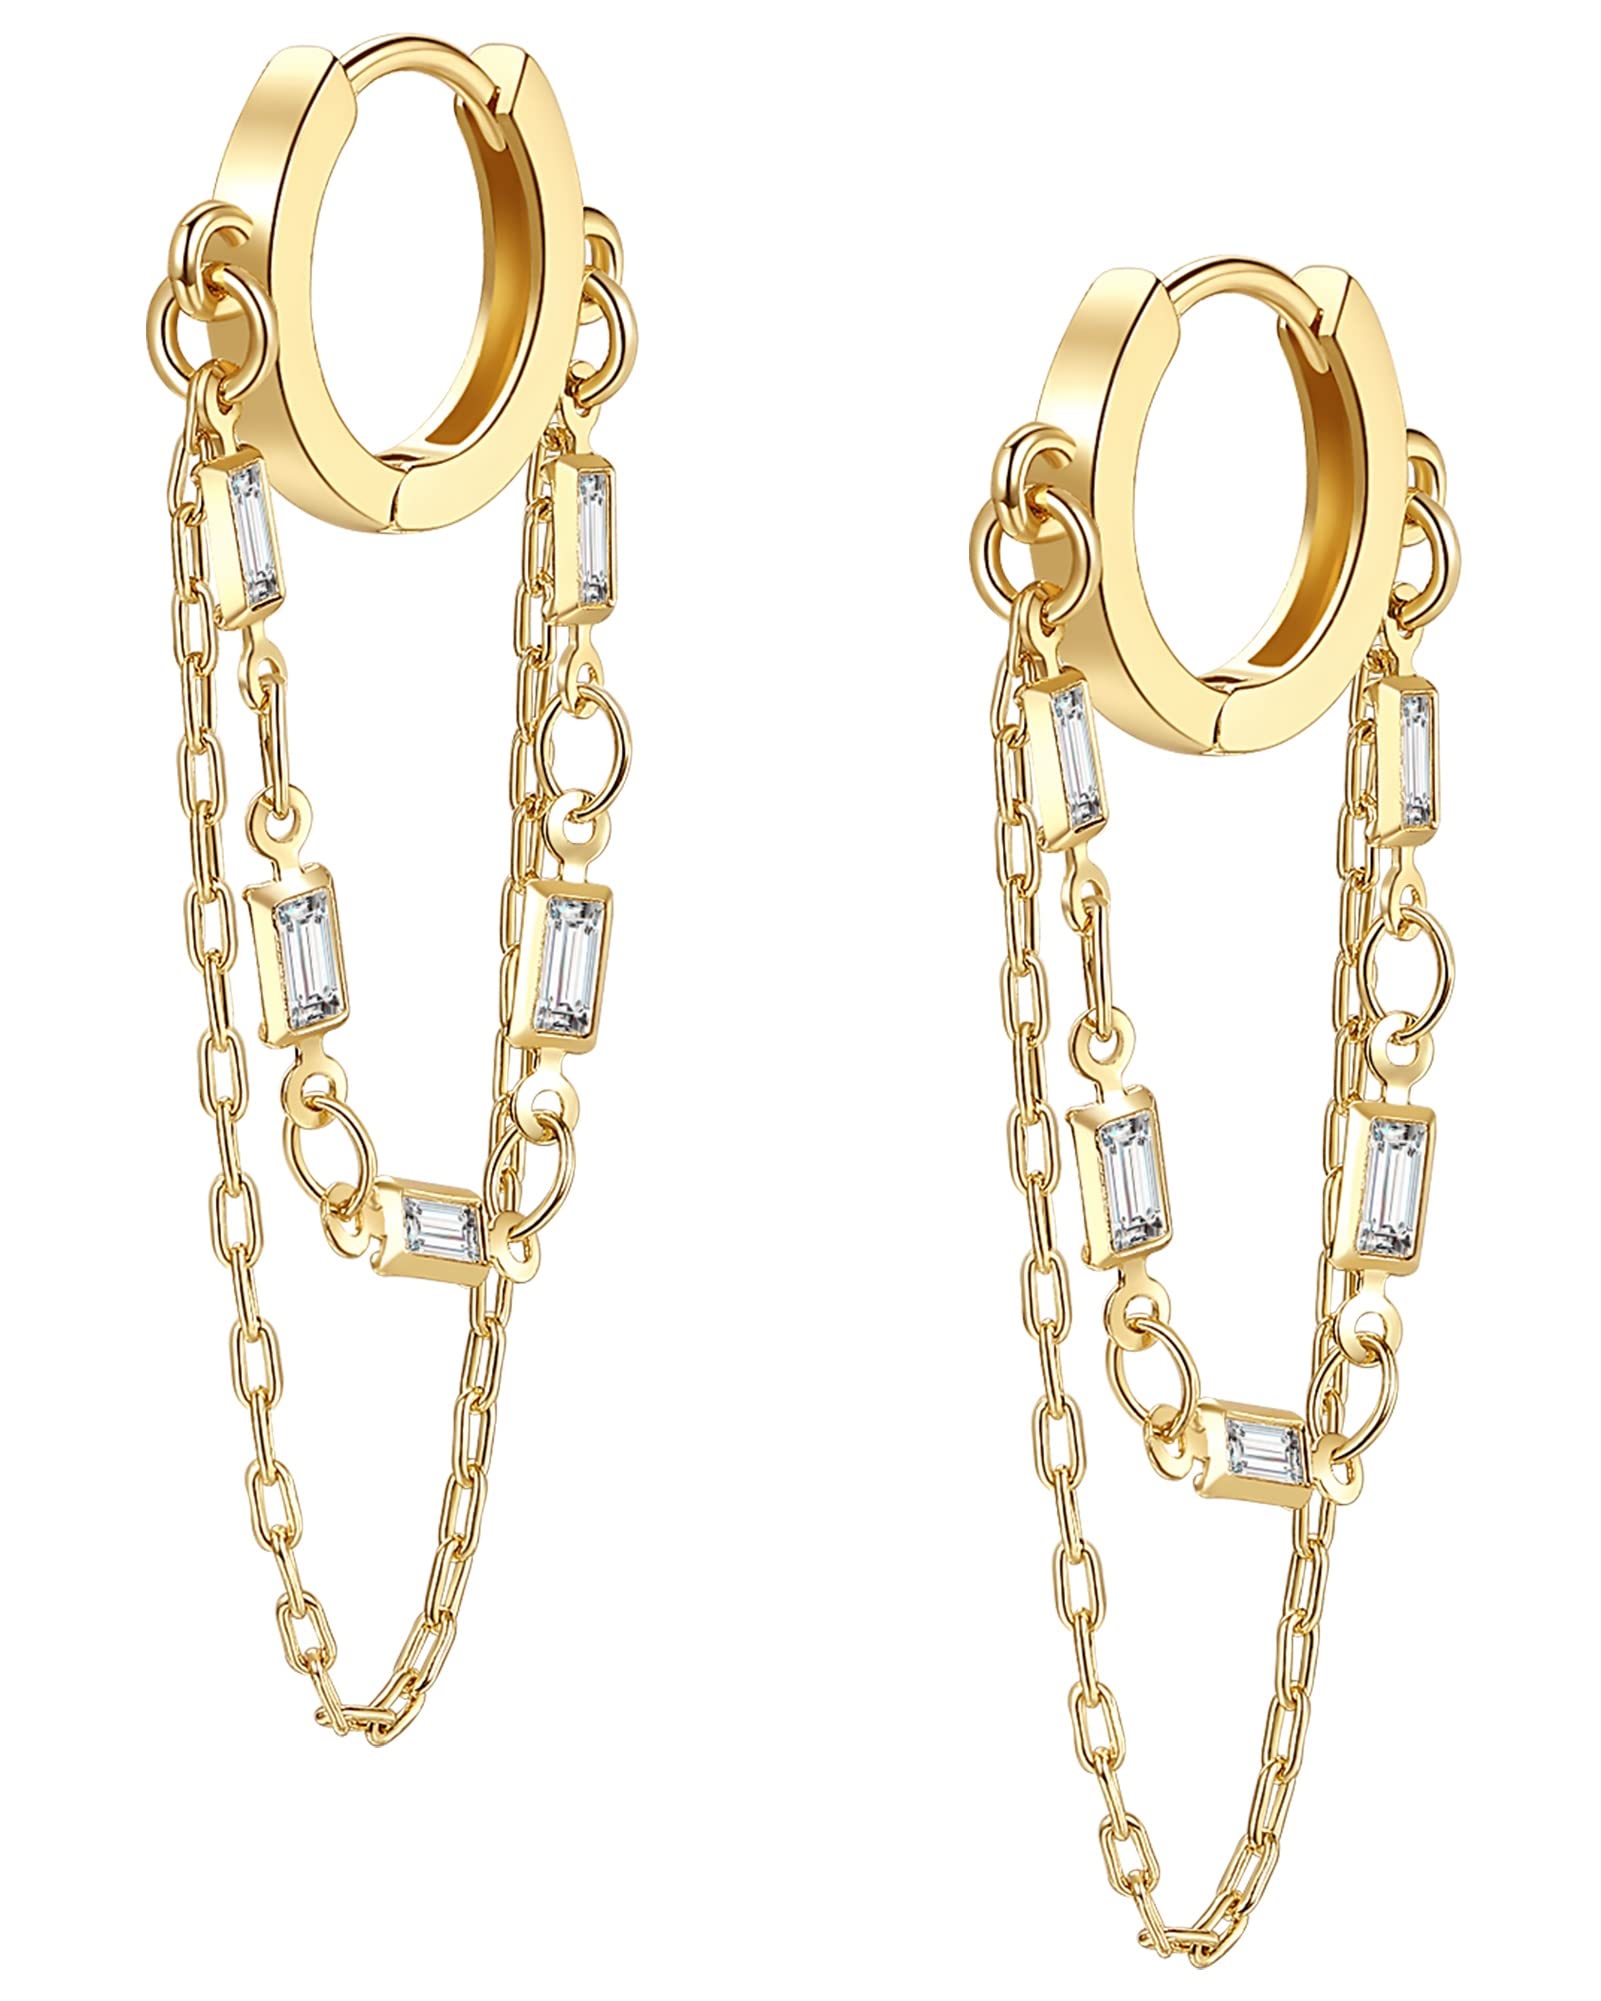 Shownee Tassel Chain Small Gold Hoop Dangle Earring For Women Girl Huggie Earring Heart Star CZ 14K Gold Plated Fashion Jewelry Friendship Gift For Teen Girls